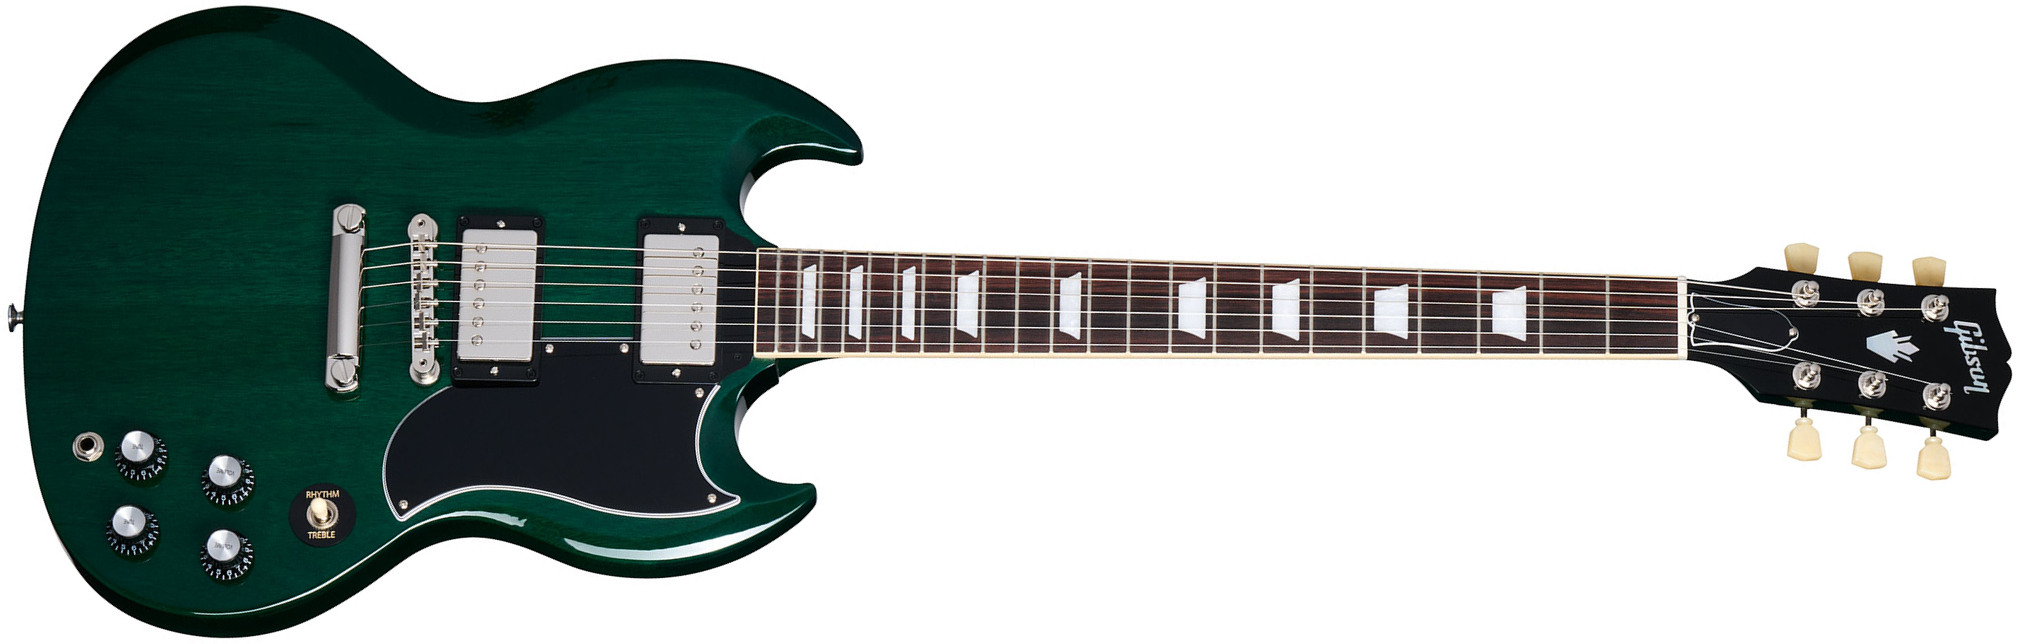 Gibson Sg Standard 1961 Custom Color 2h Ht Rw - Translucent Teal - Double Cut E-Gitarre - Main picture